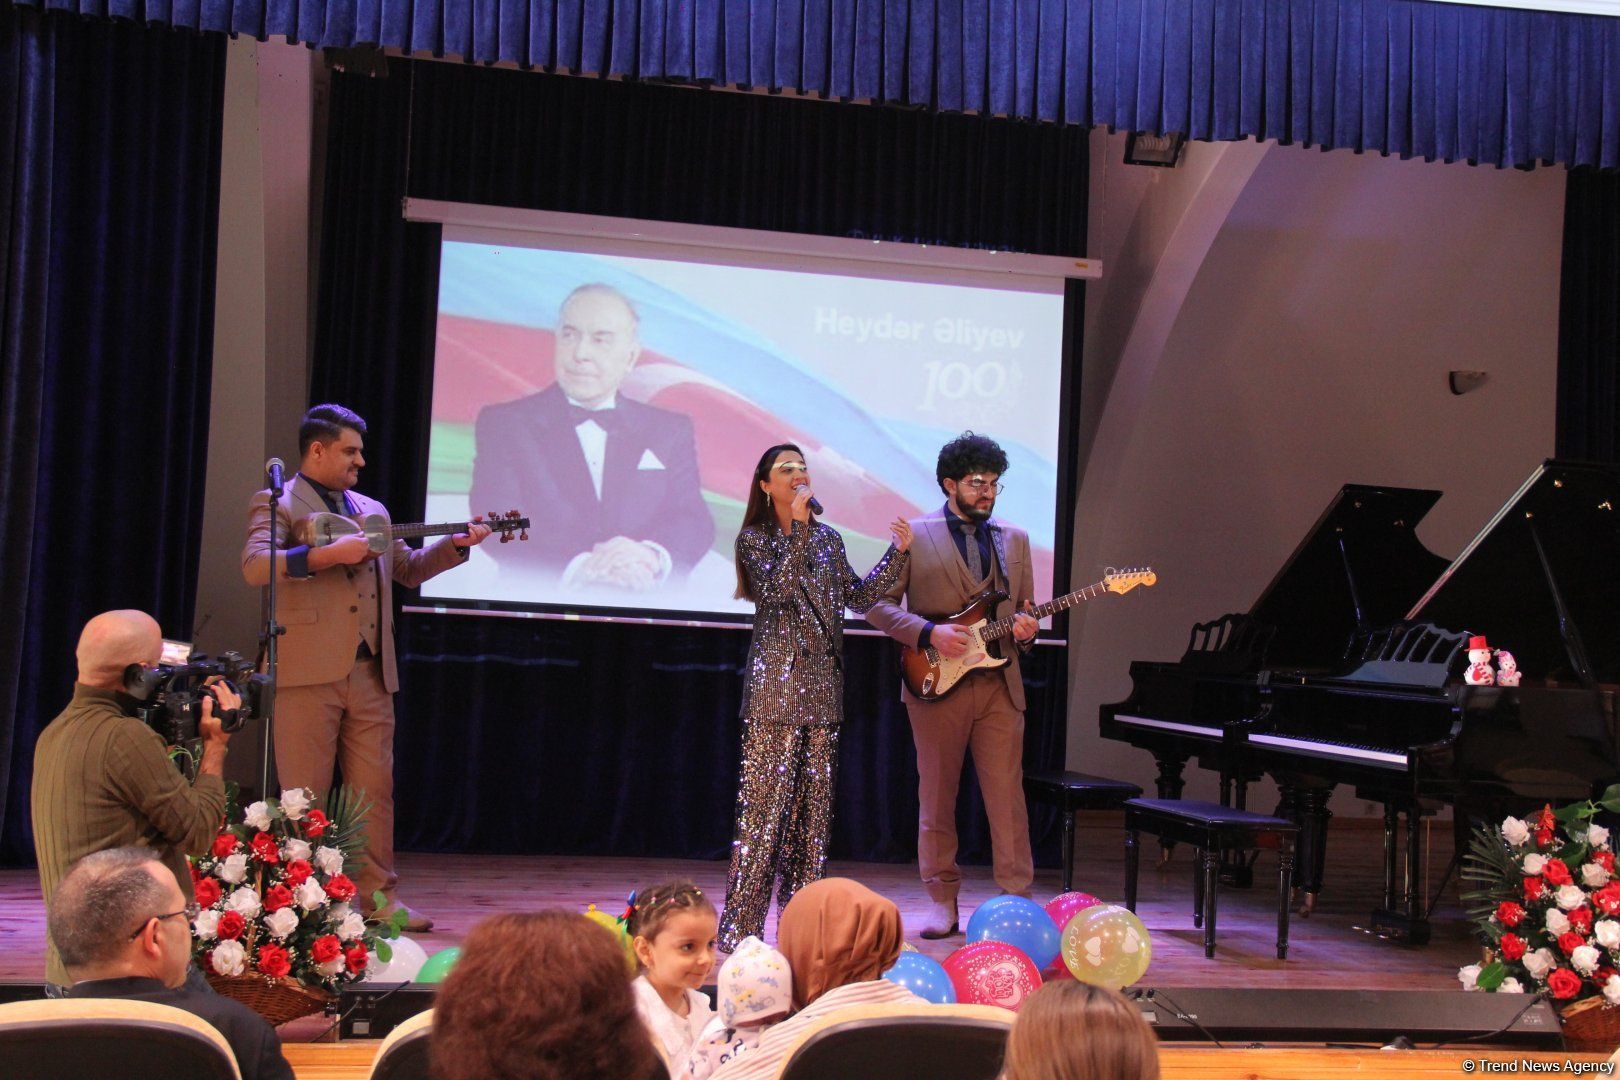 Charity concert held at Gara Garayev Central Arts School [PHOTOS]